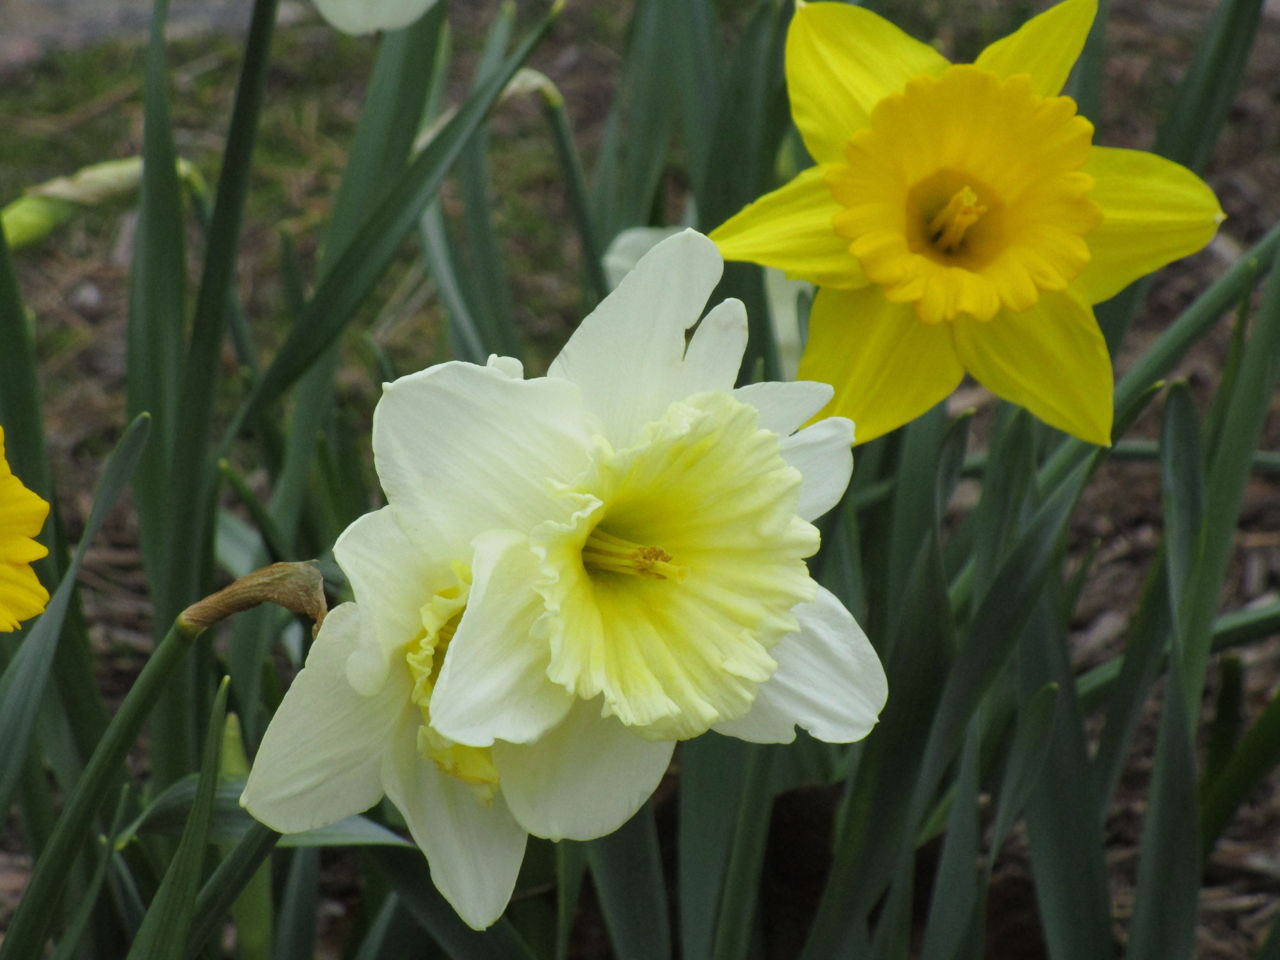 the daffodils